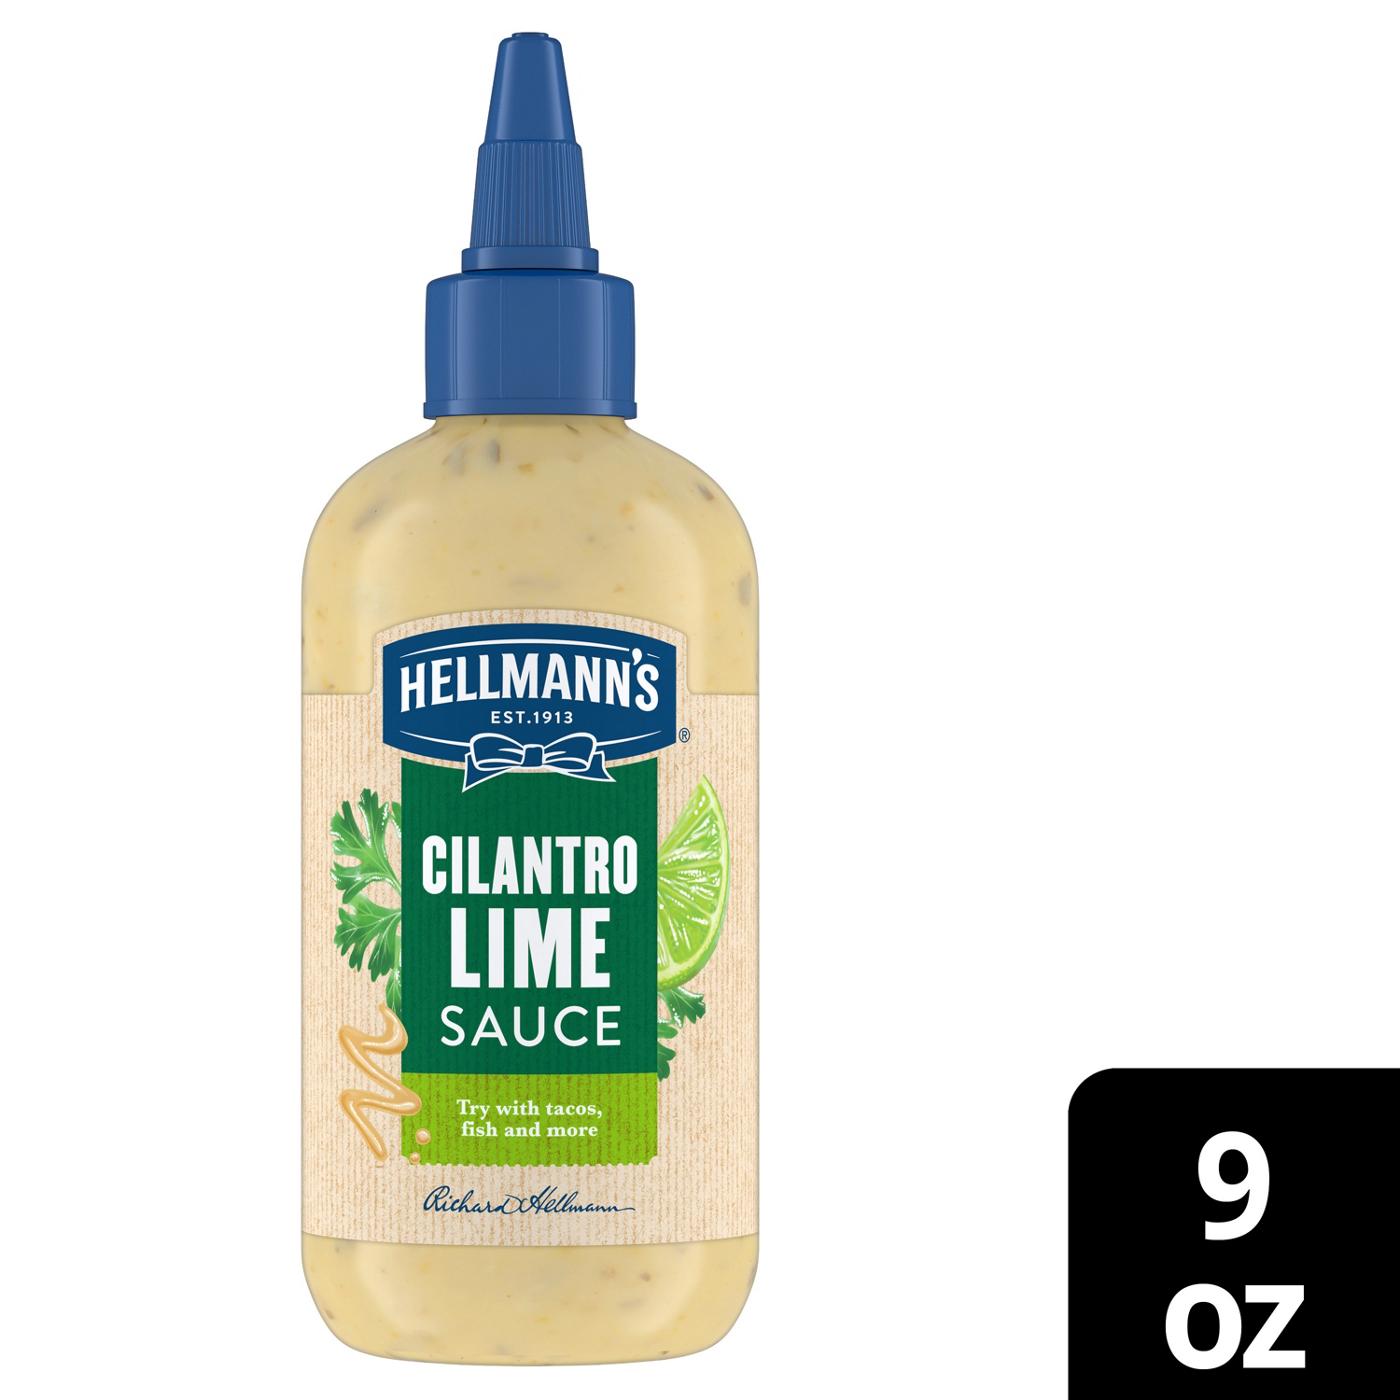 Hellmann's Cilantro Lime Sauce; image 3 of 9